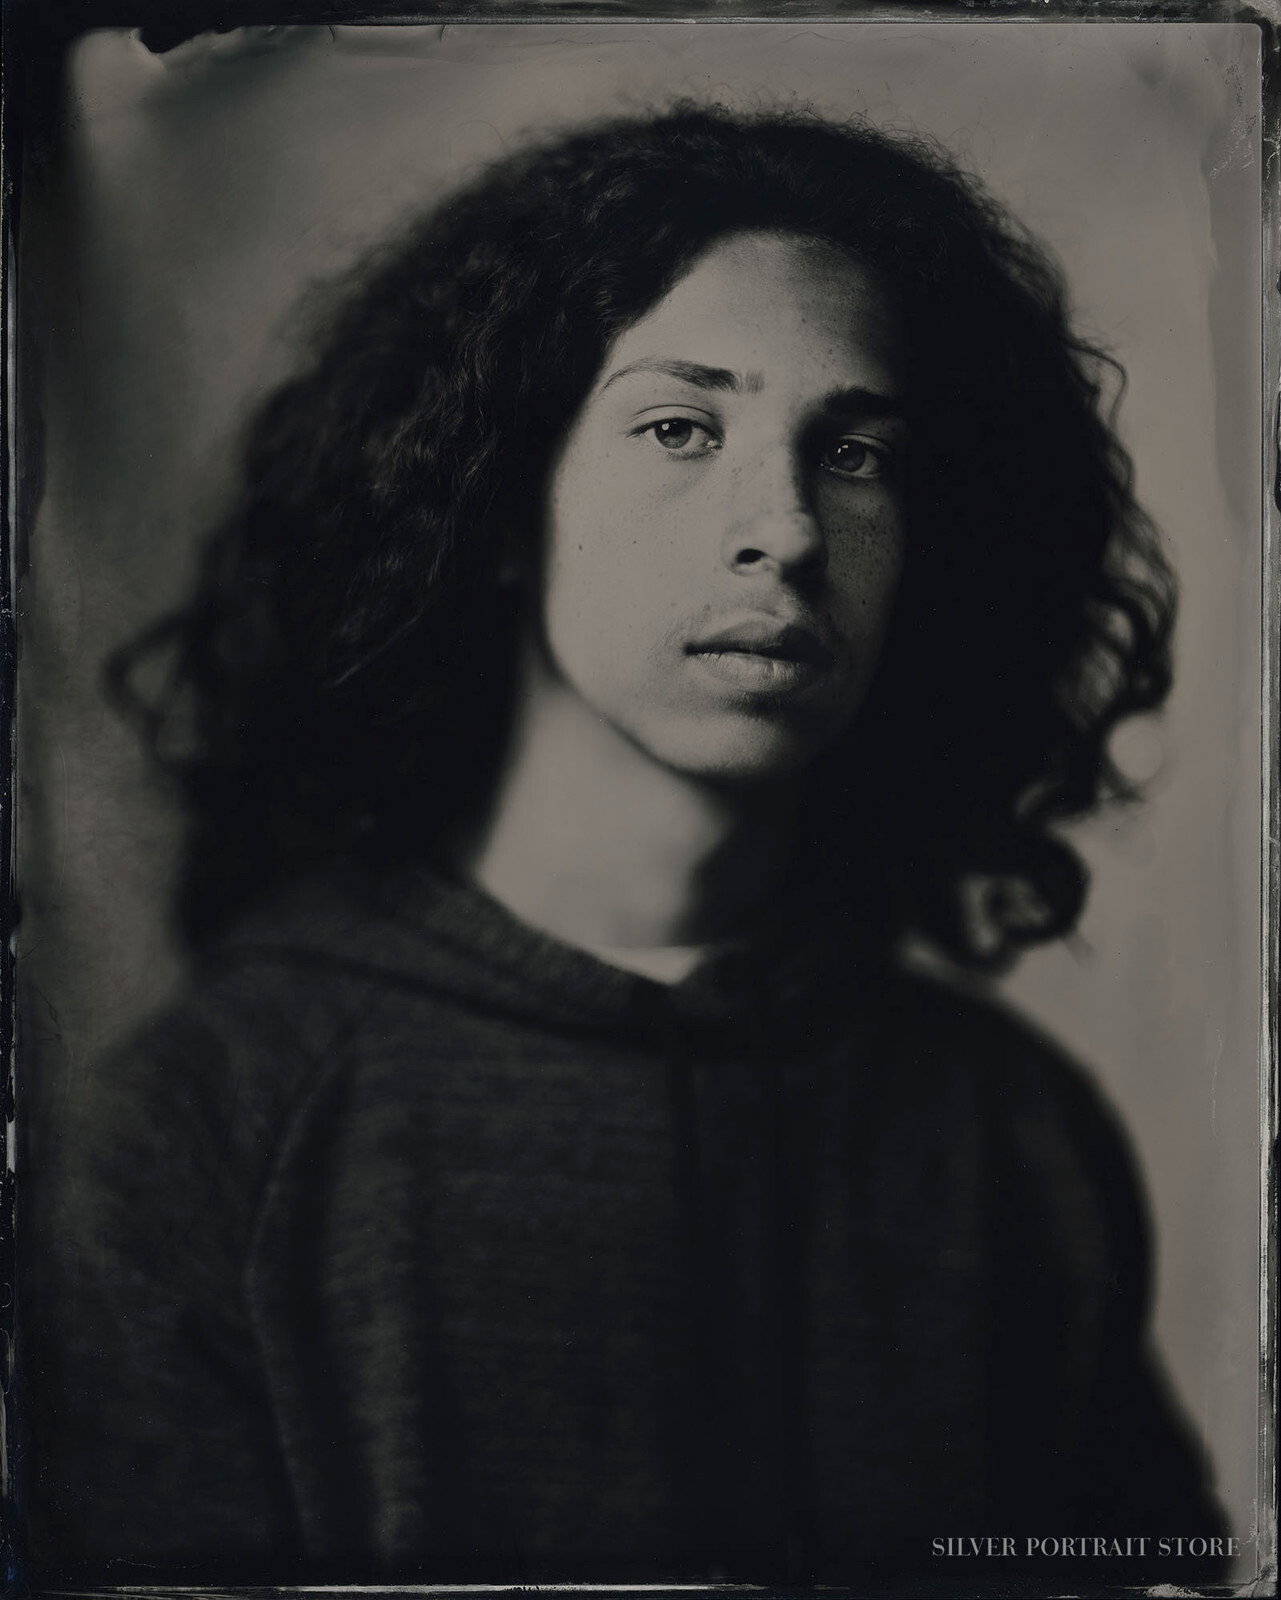 David-Silver Portrait Store-Wet plate collodion-Tintype 20 x 25 cm.